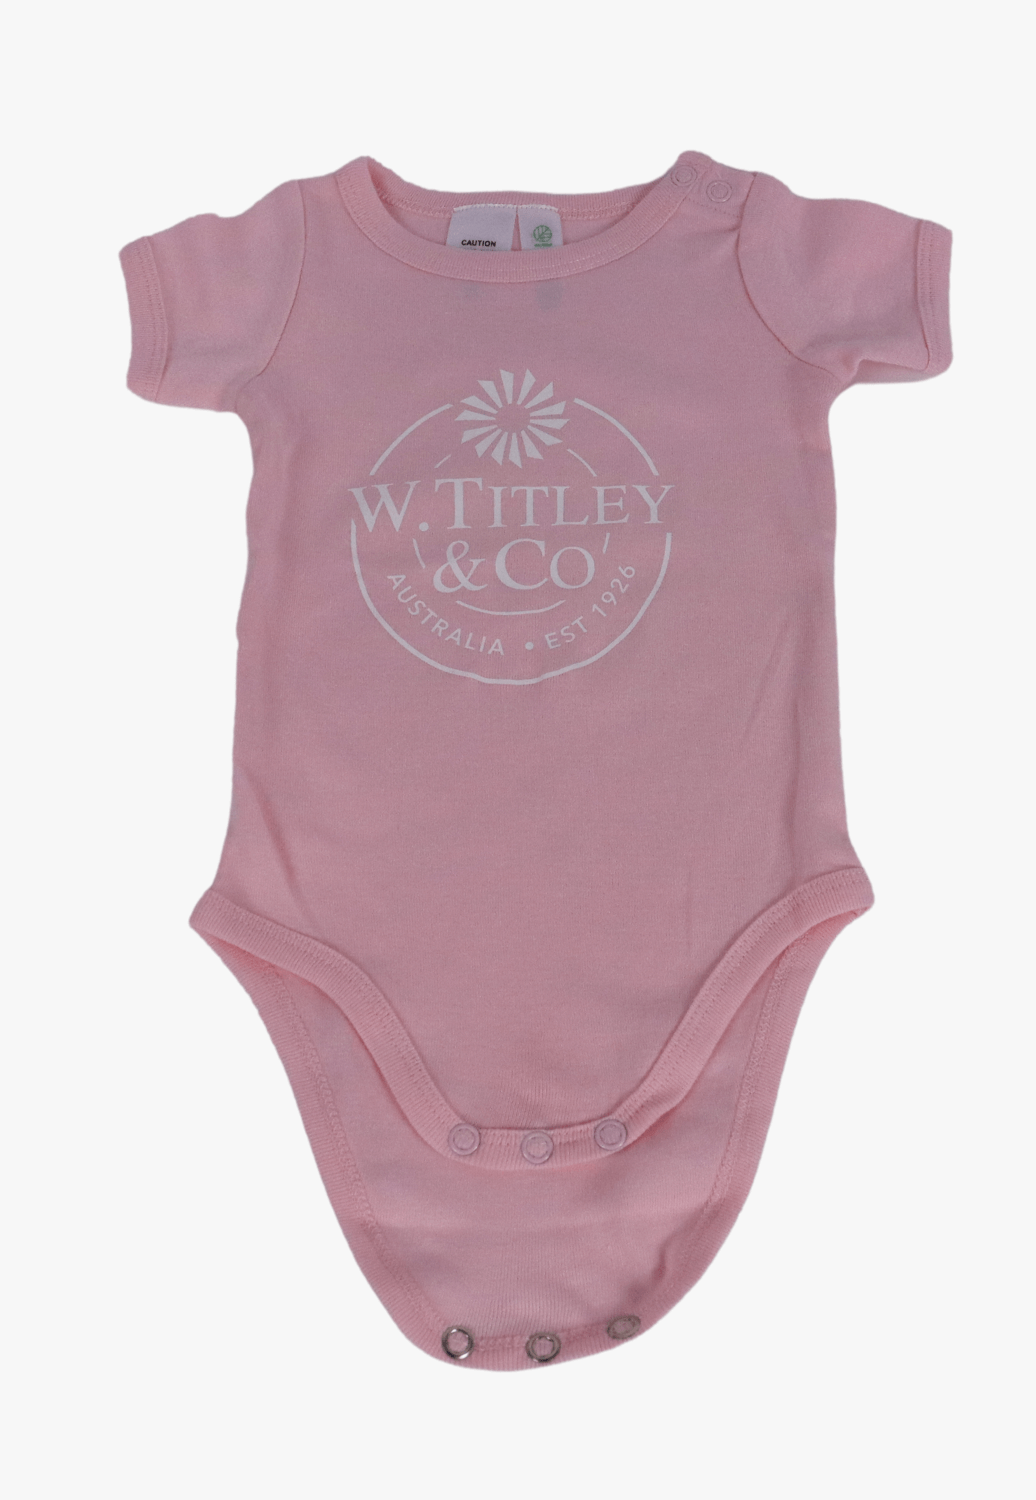 W. Titley & Co. Infants Original Onesie